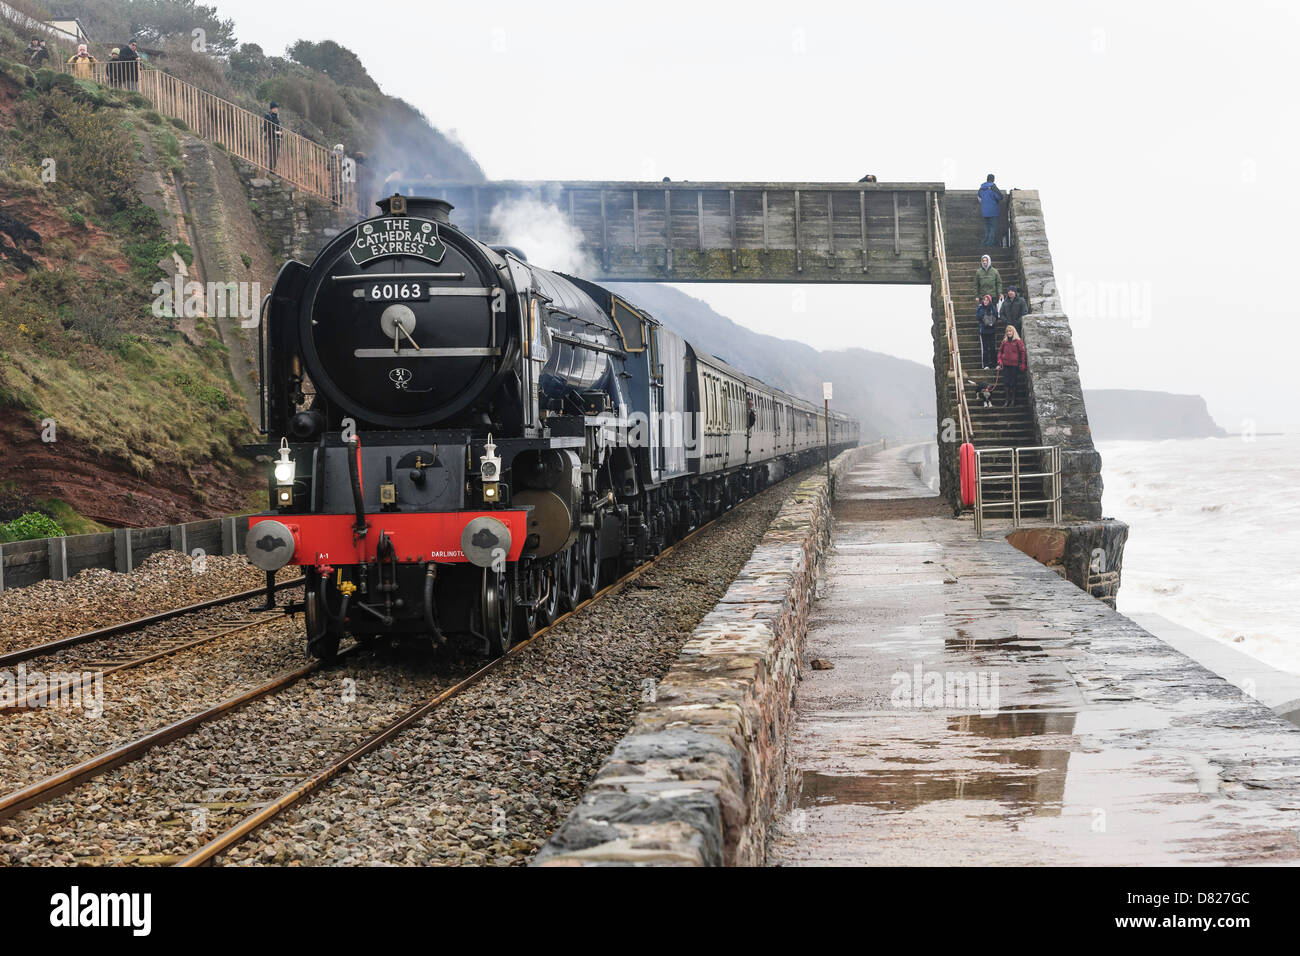 The Cathedrals Express train hauled by steam locomotive 60163 Tornado passes under a footbridge near Dawlish south Devon UK. Stock Photo